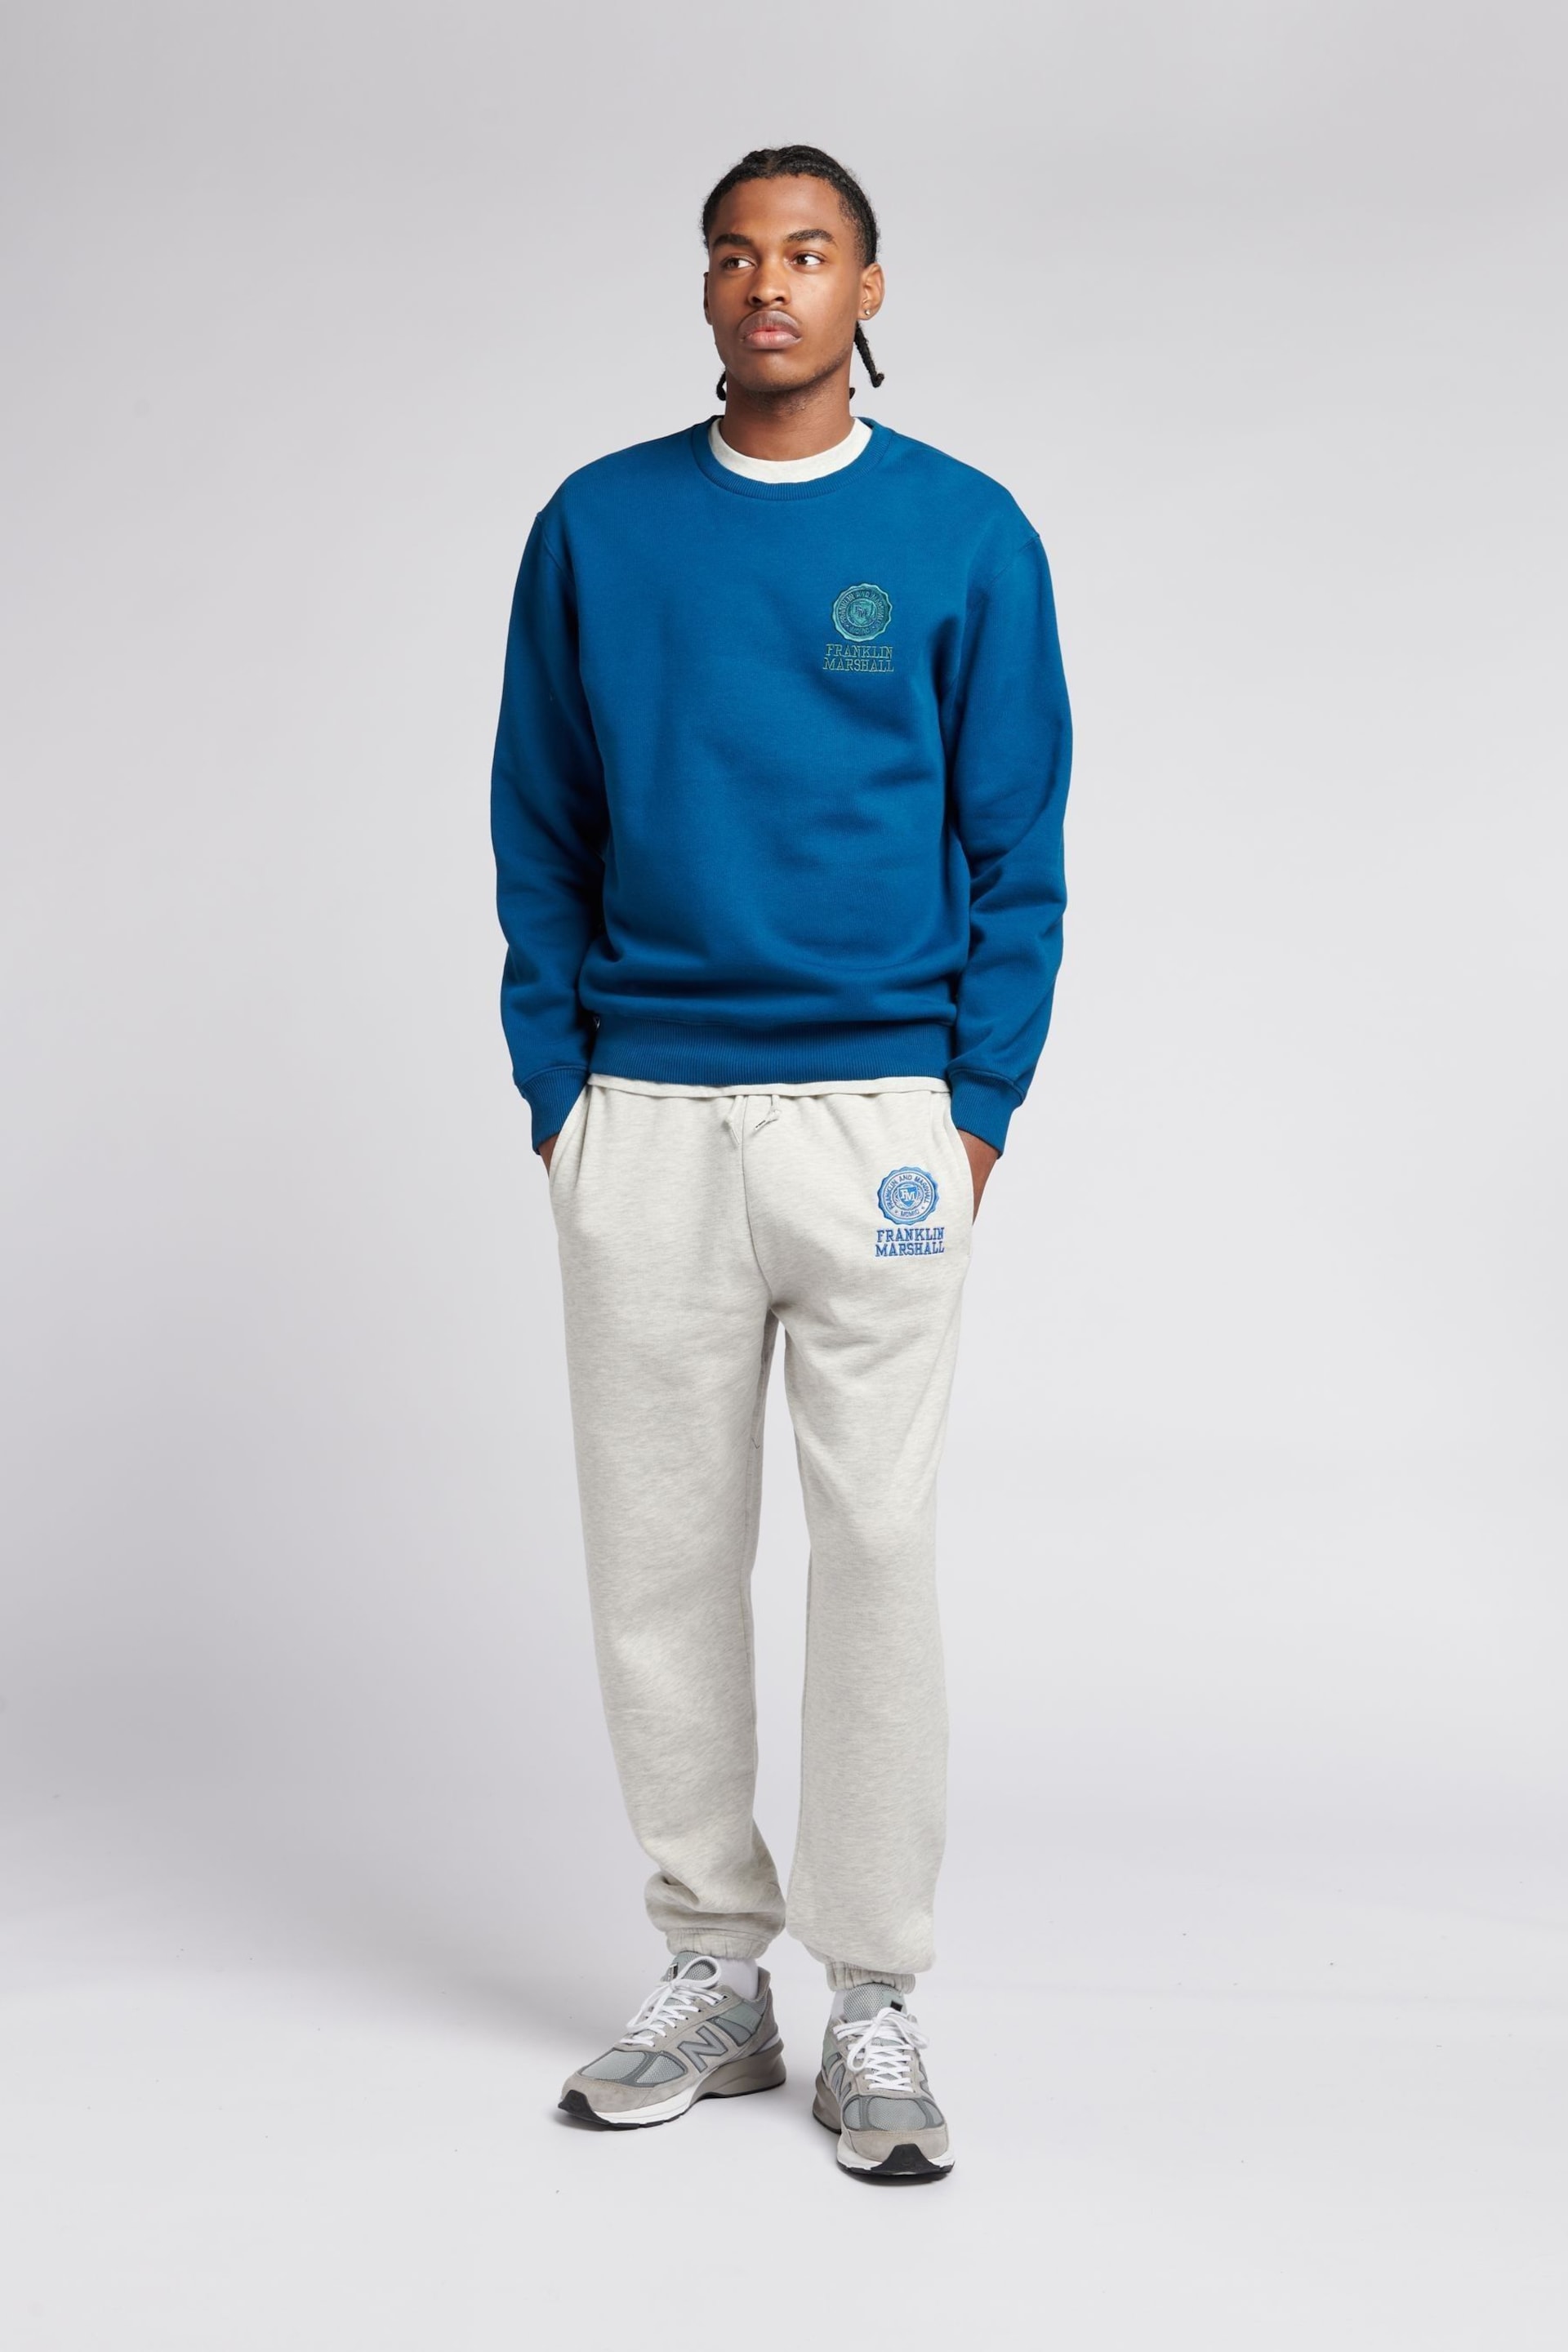 Franklin & Marshall Mens Blue Crest Crew Sweatshirt - Image 3 of 5